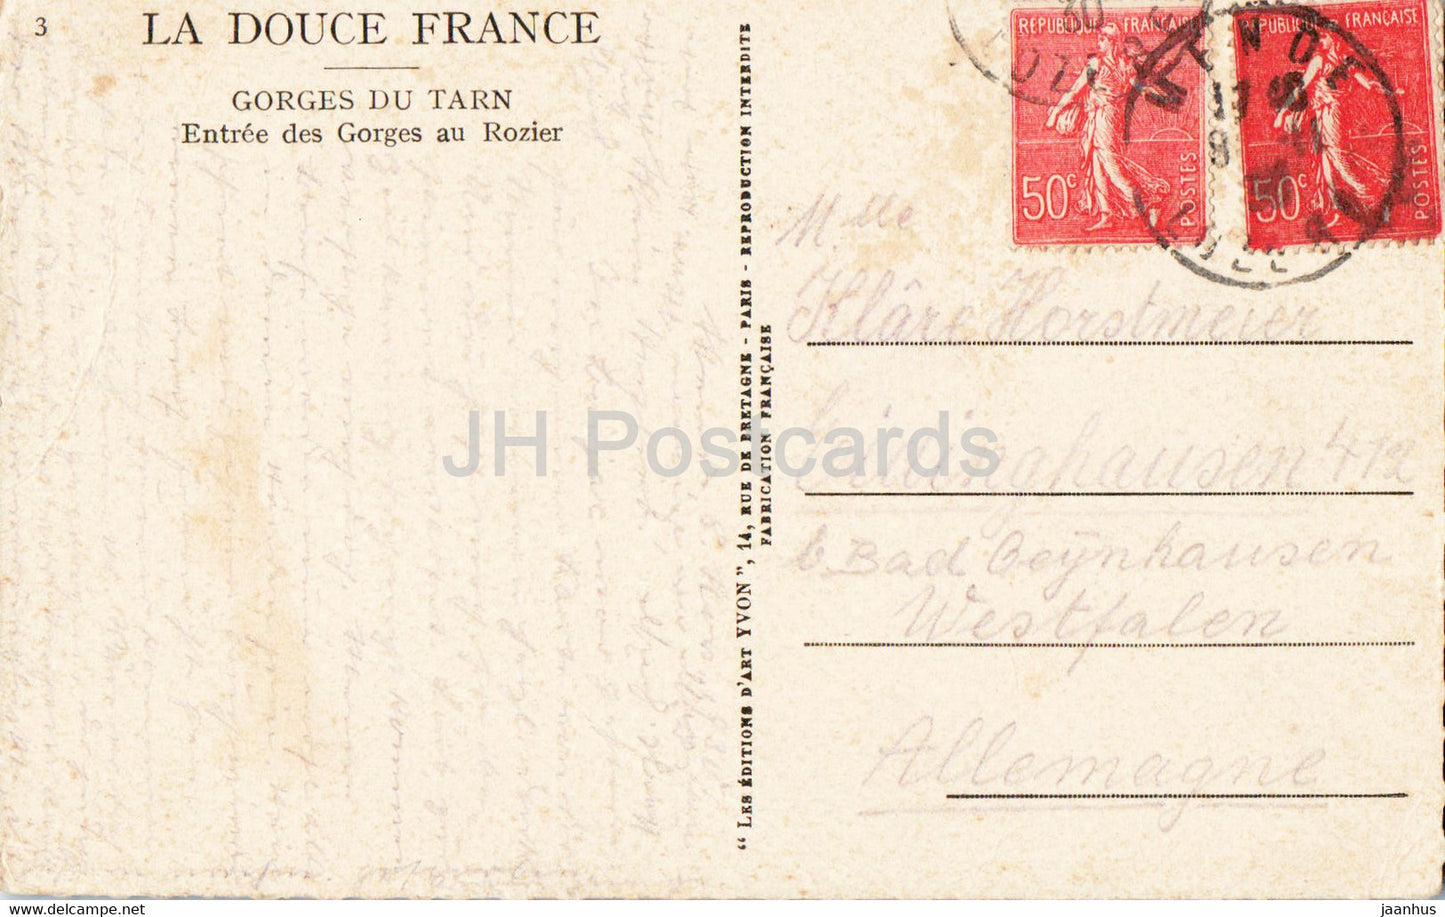 Gorges du Tarn - Entree des Gorges au Rozier - La Douce Frankreich - 3 - alte Postkarte - Frankreich - gebraucht